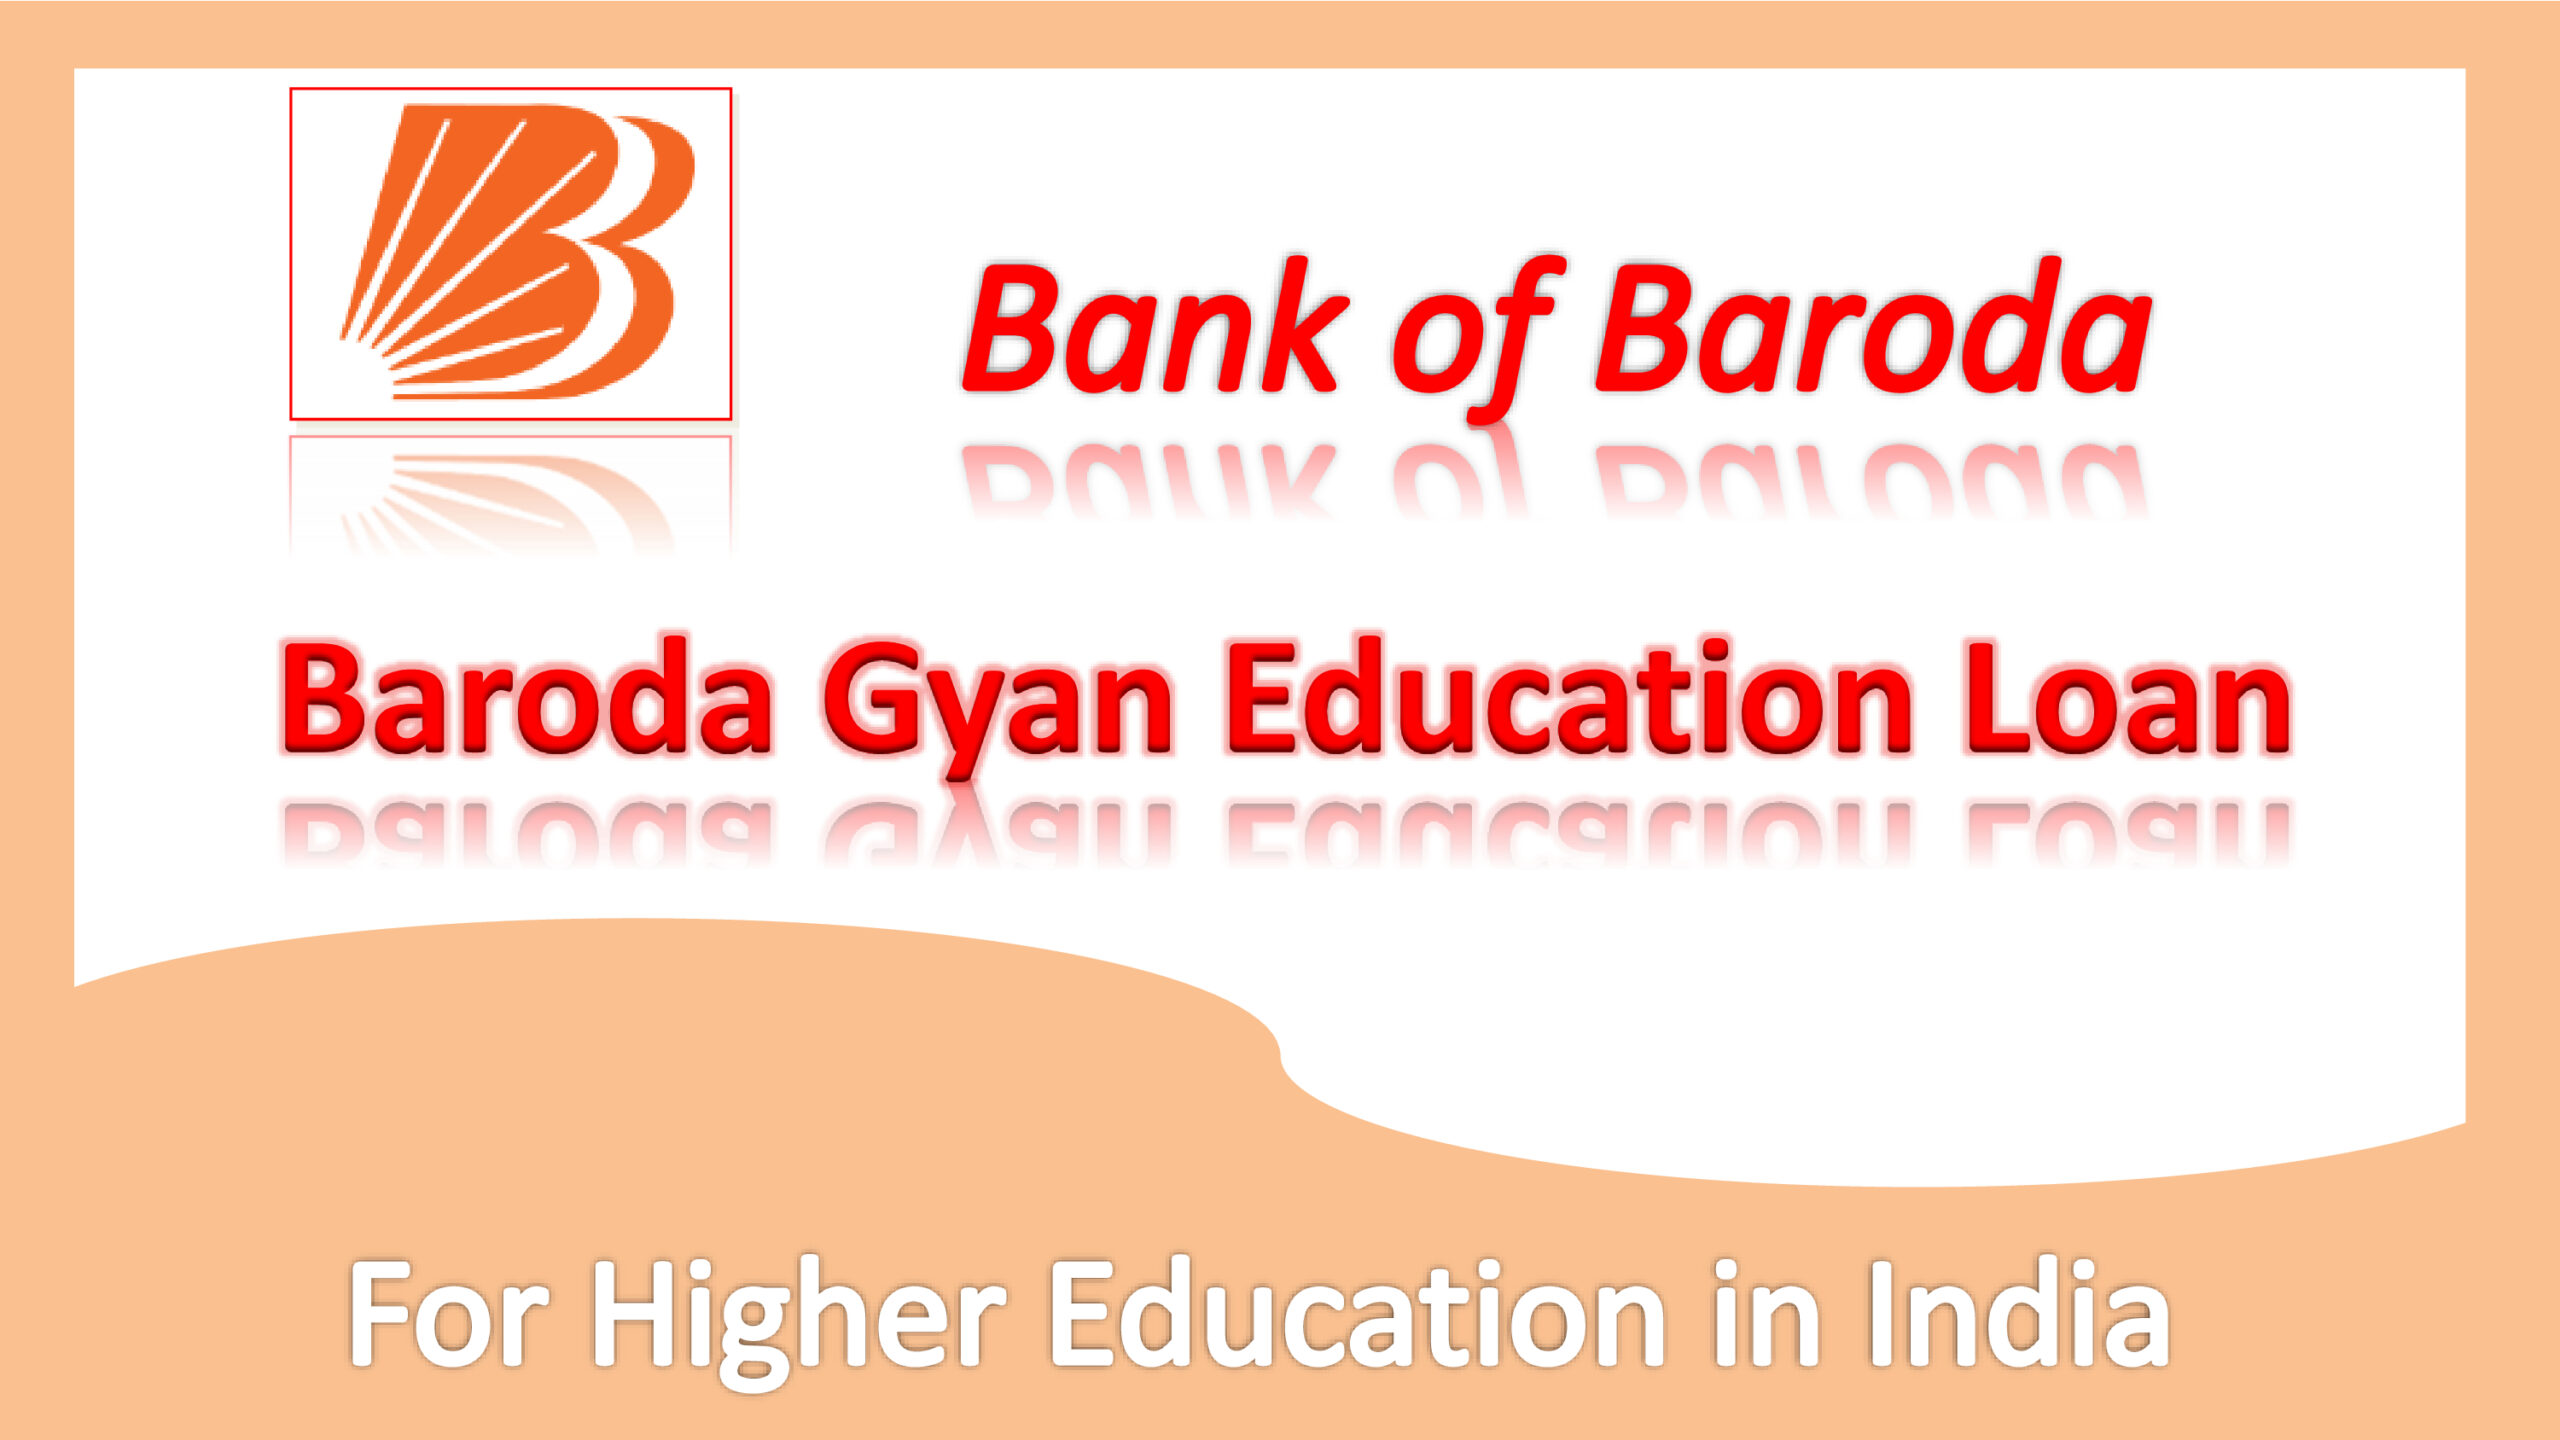 Baroda Gyan Education loan